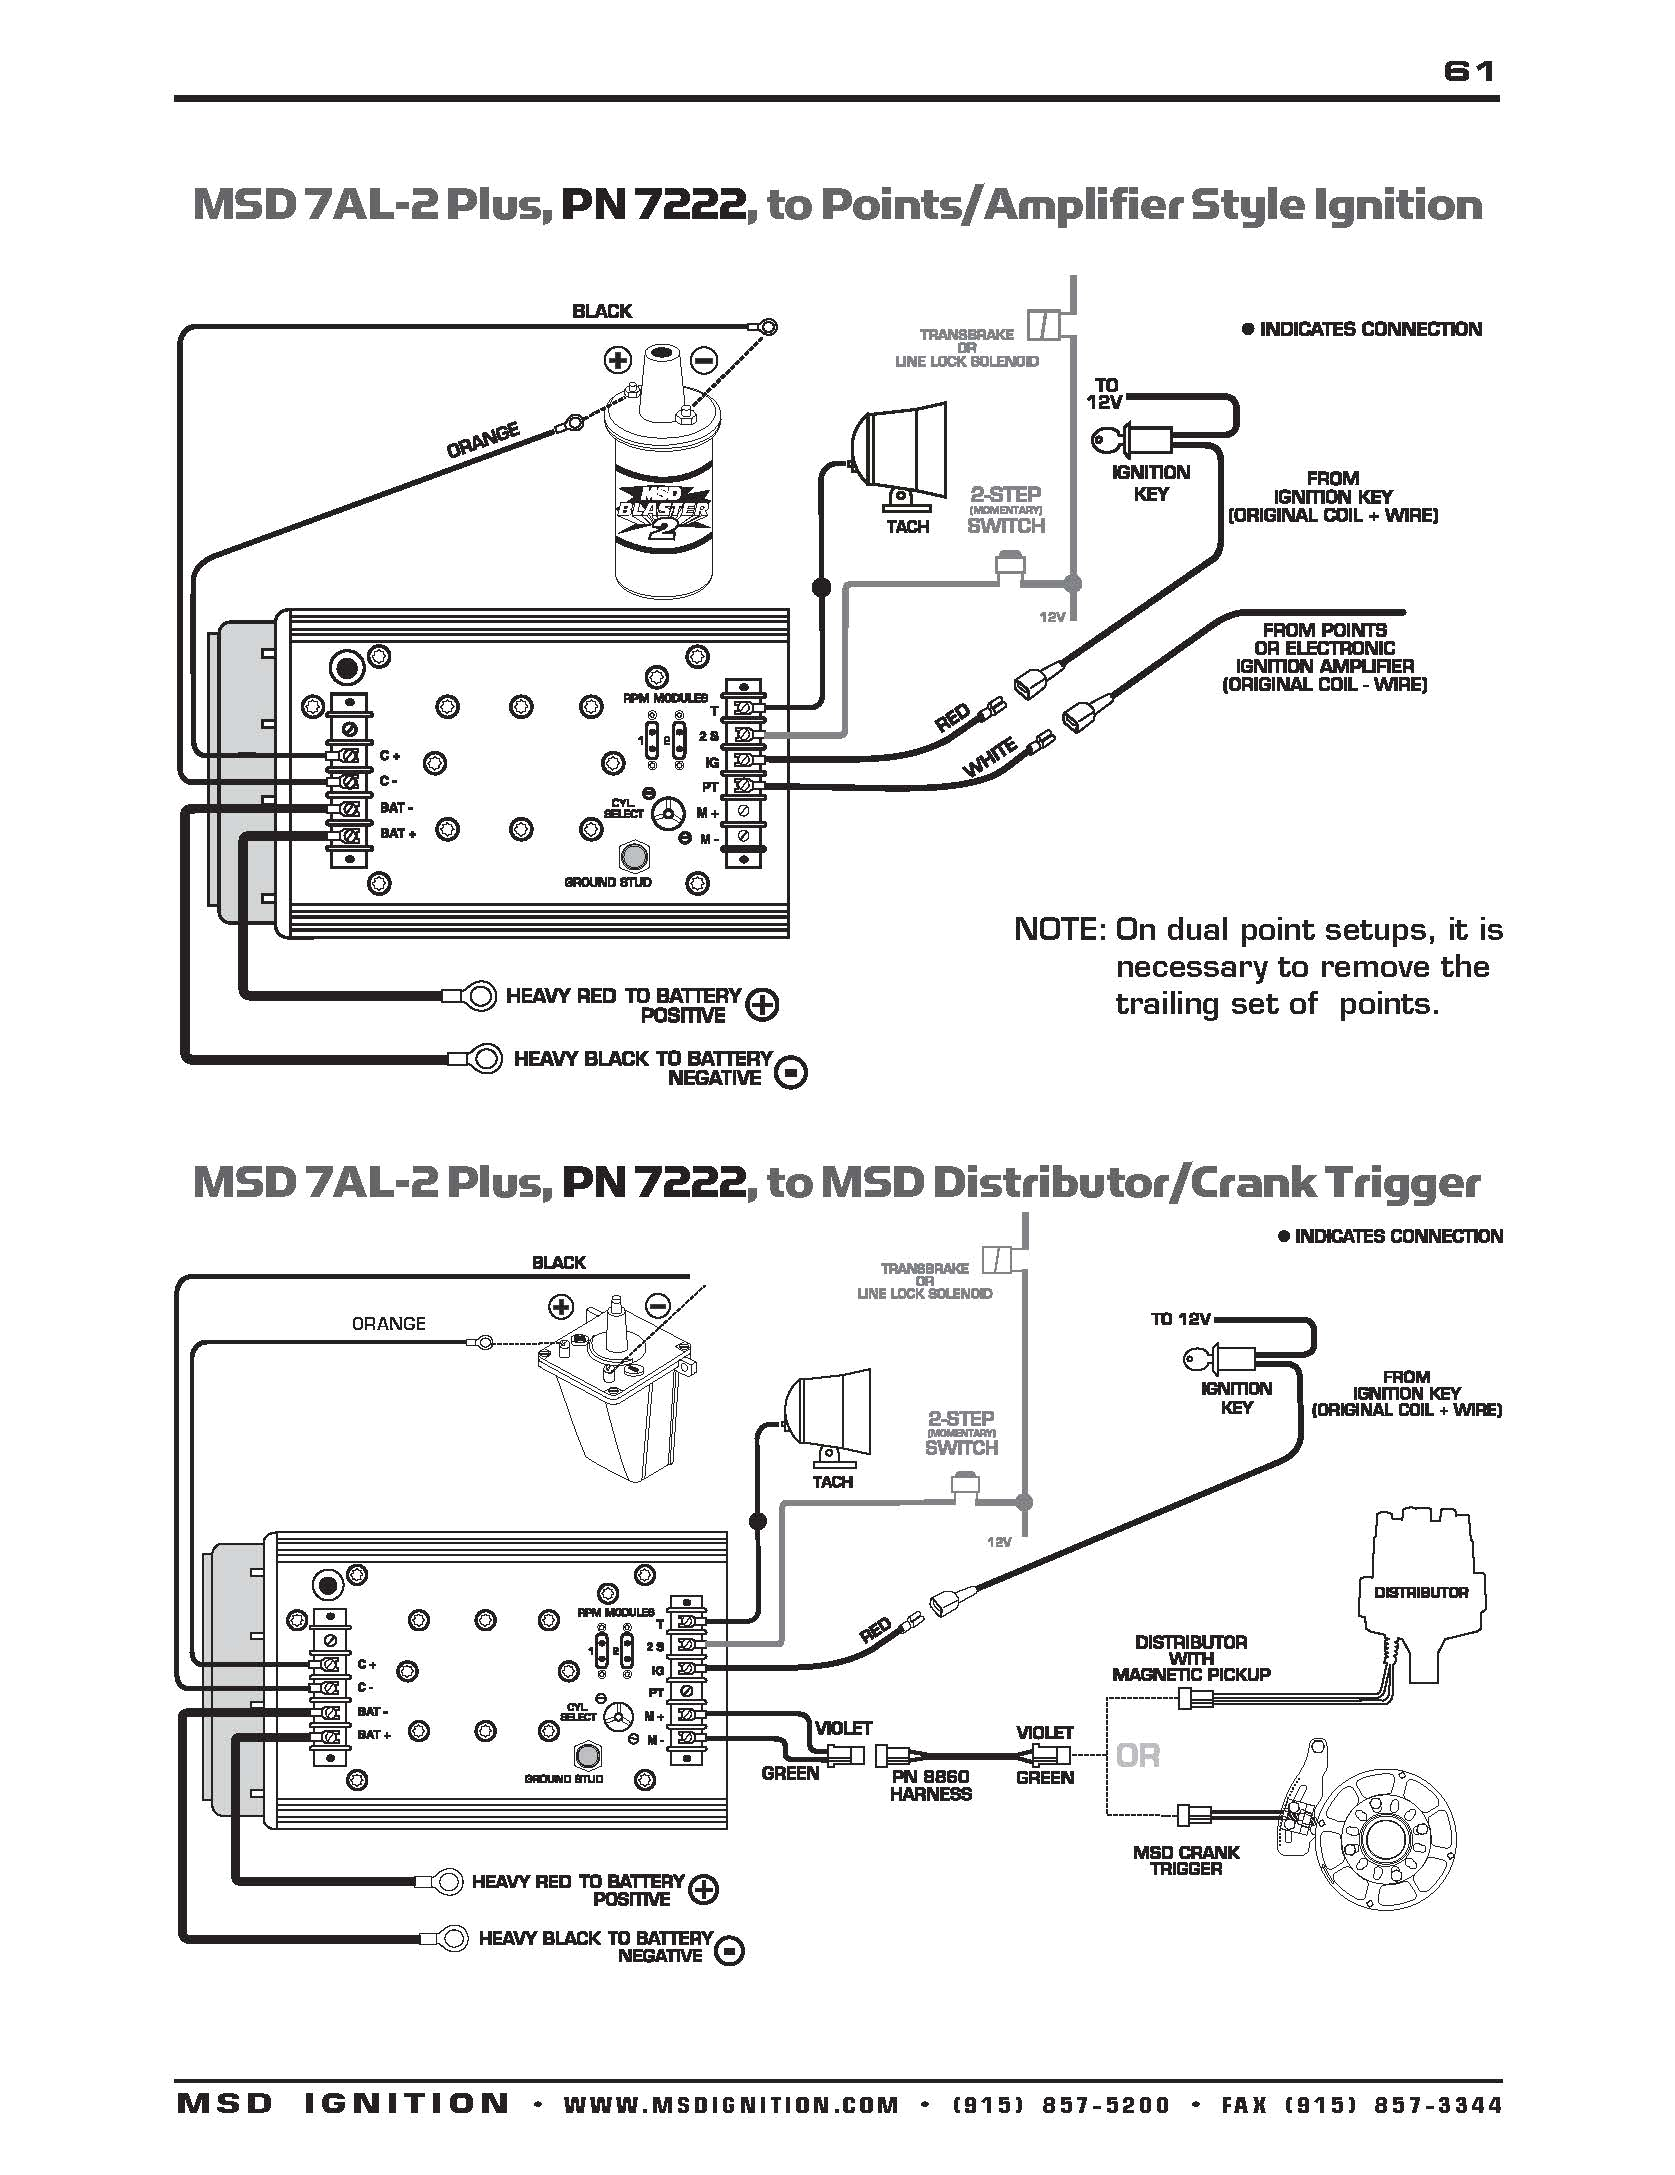 digital 6al wiring diagram inspirational msd digital 6al wiringdigital 6al wiring diagram fresh msd 7al 2